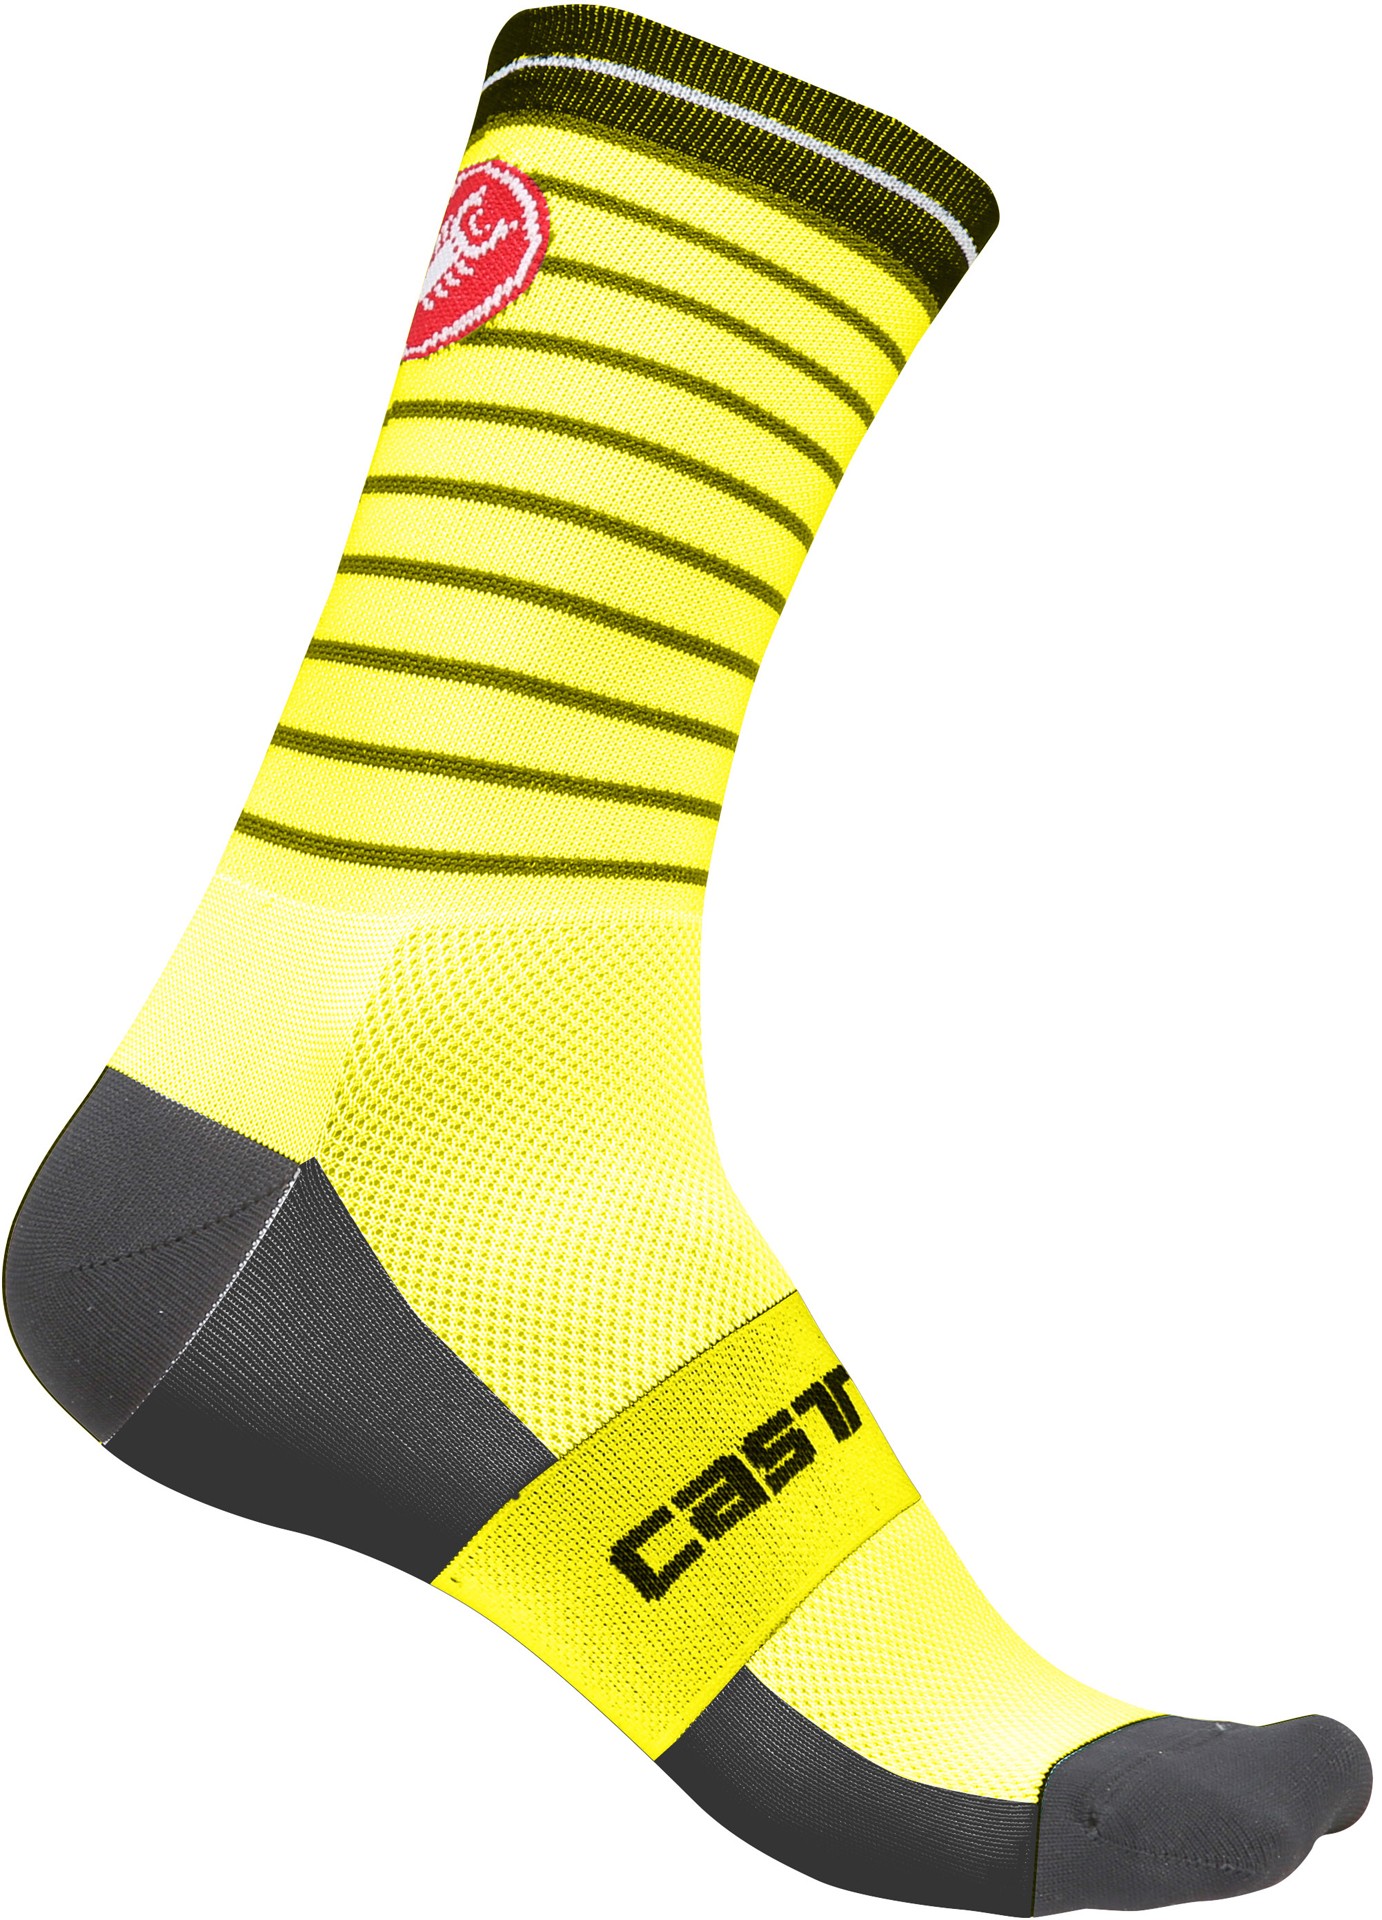 Castelli podio doppio 13 cycling sock yellow fluo black